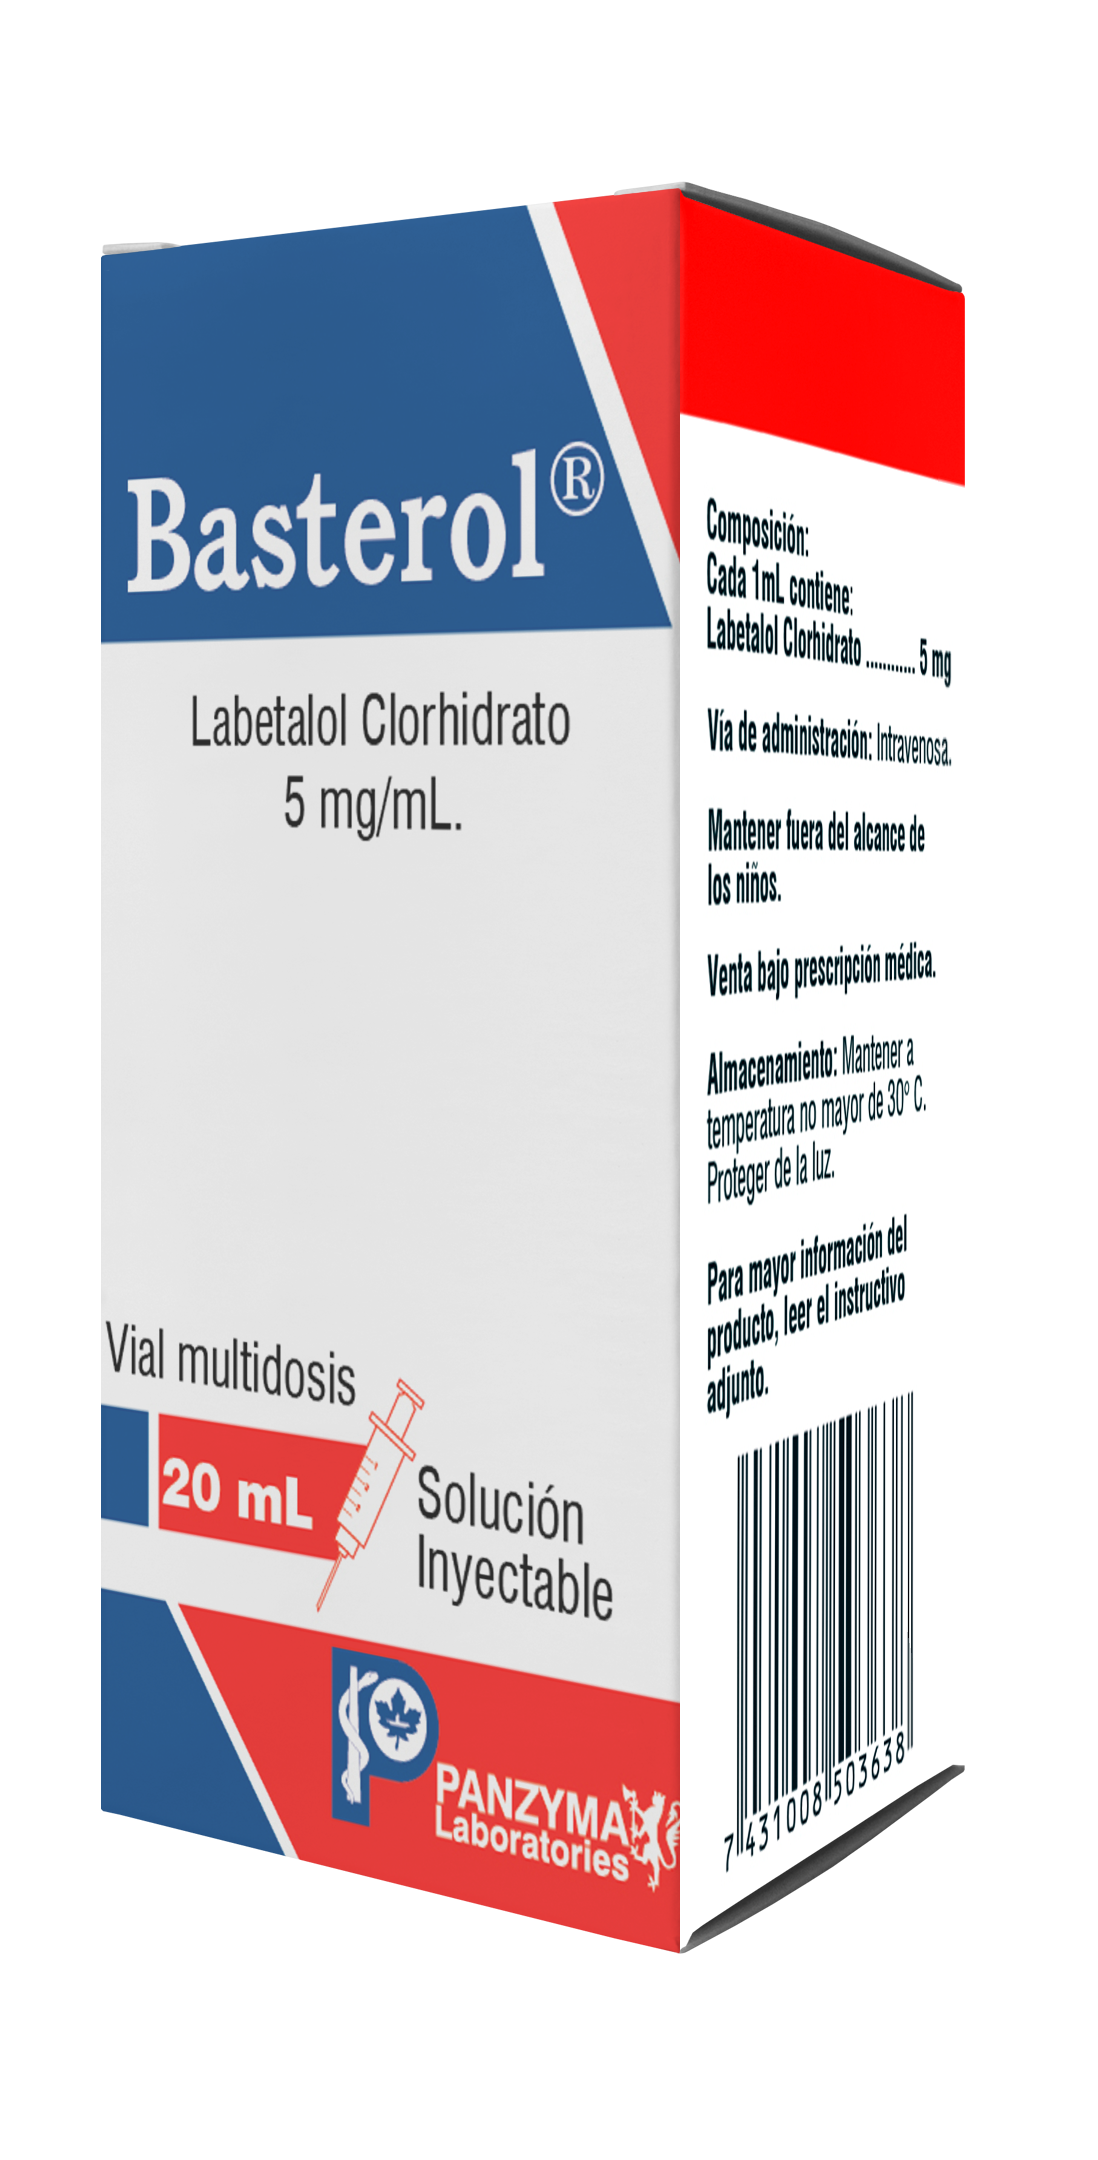 Basterol – Panzyma Laboratories